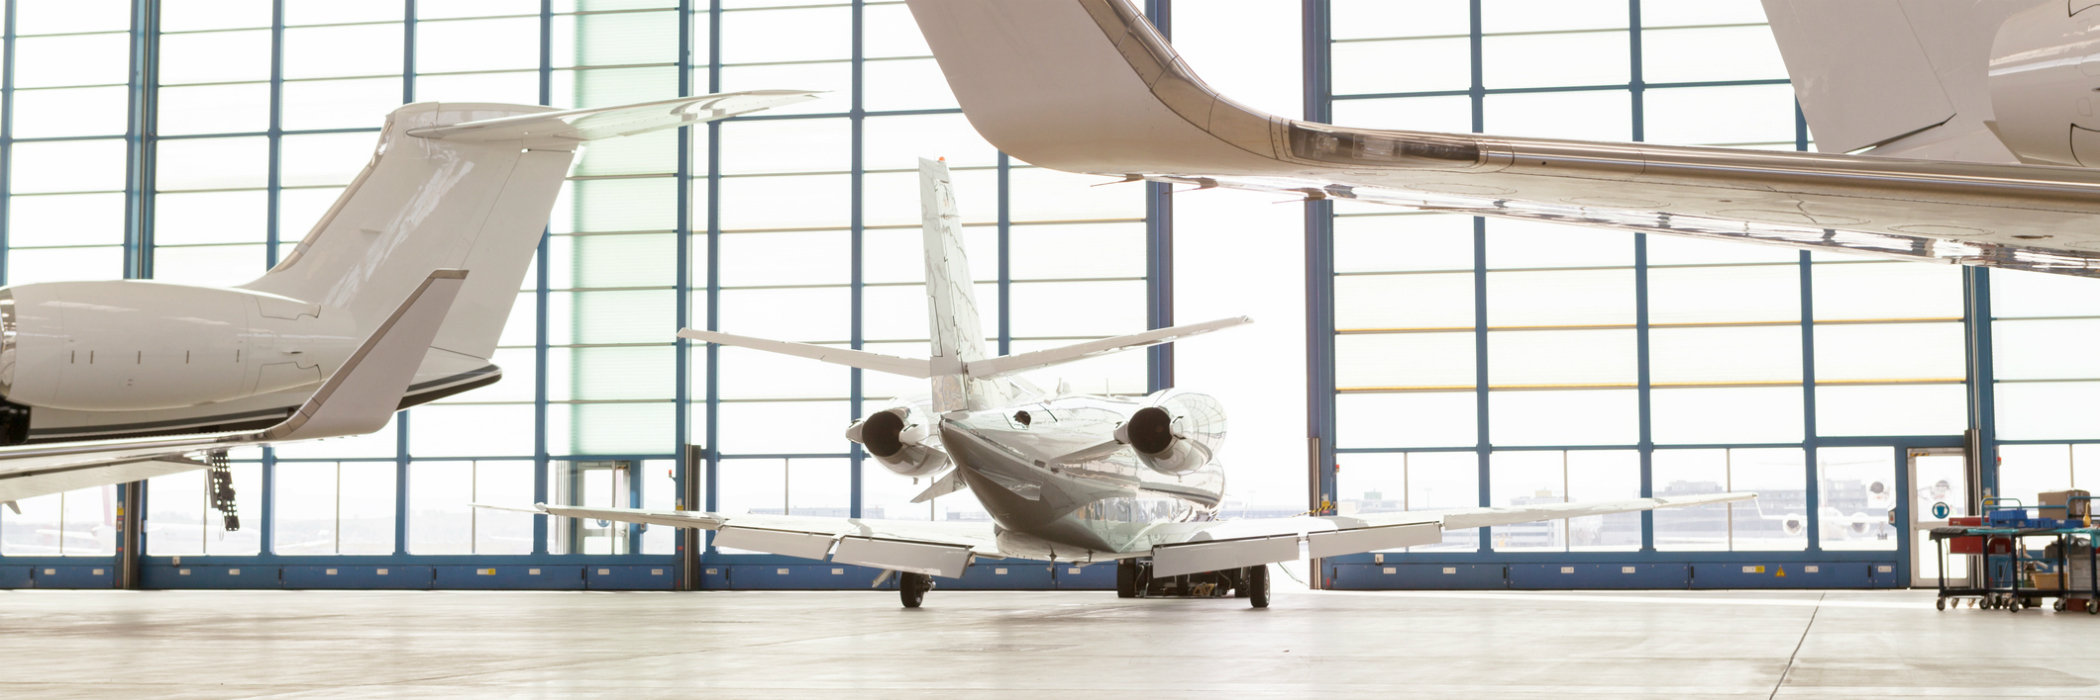 Private jets in fancy hangar